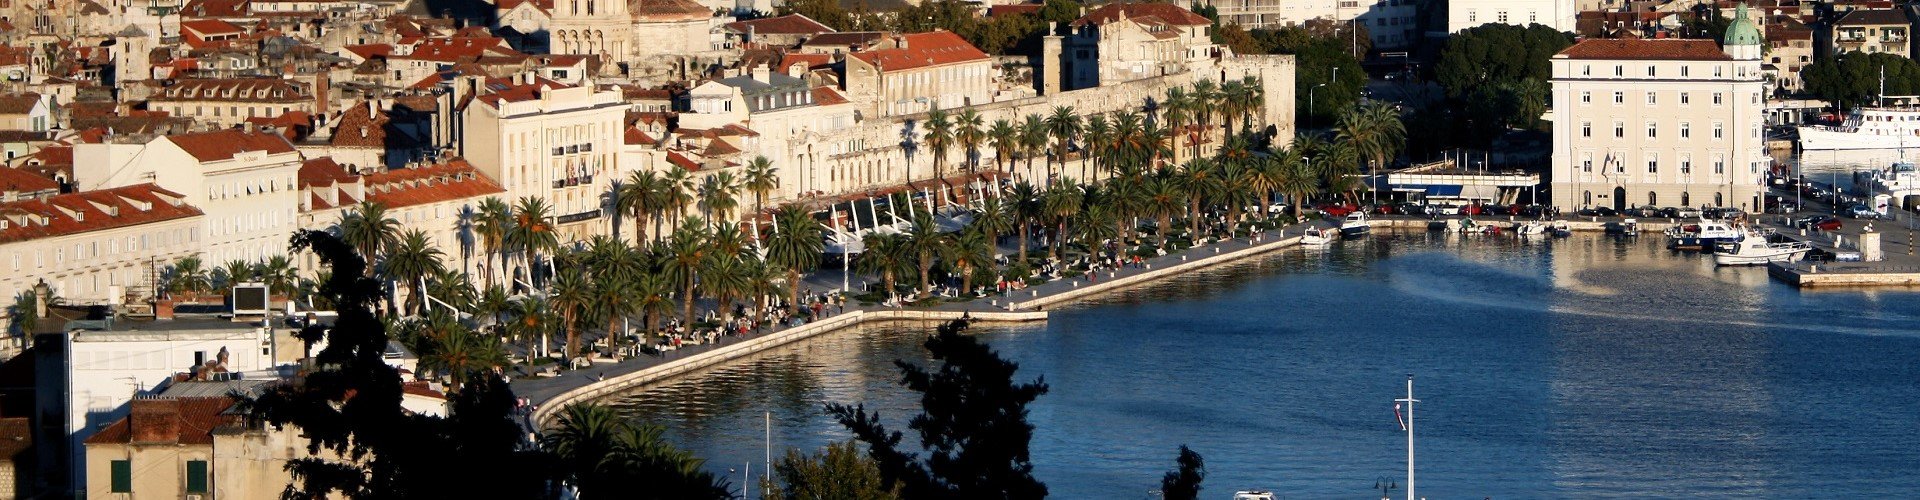 Uferpromenade Riva, Split